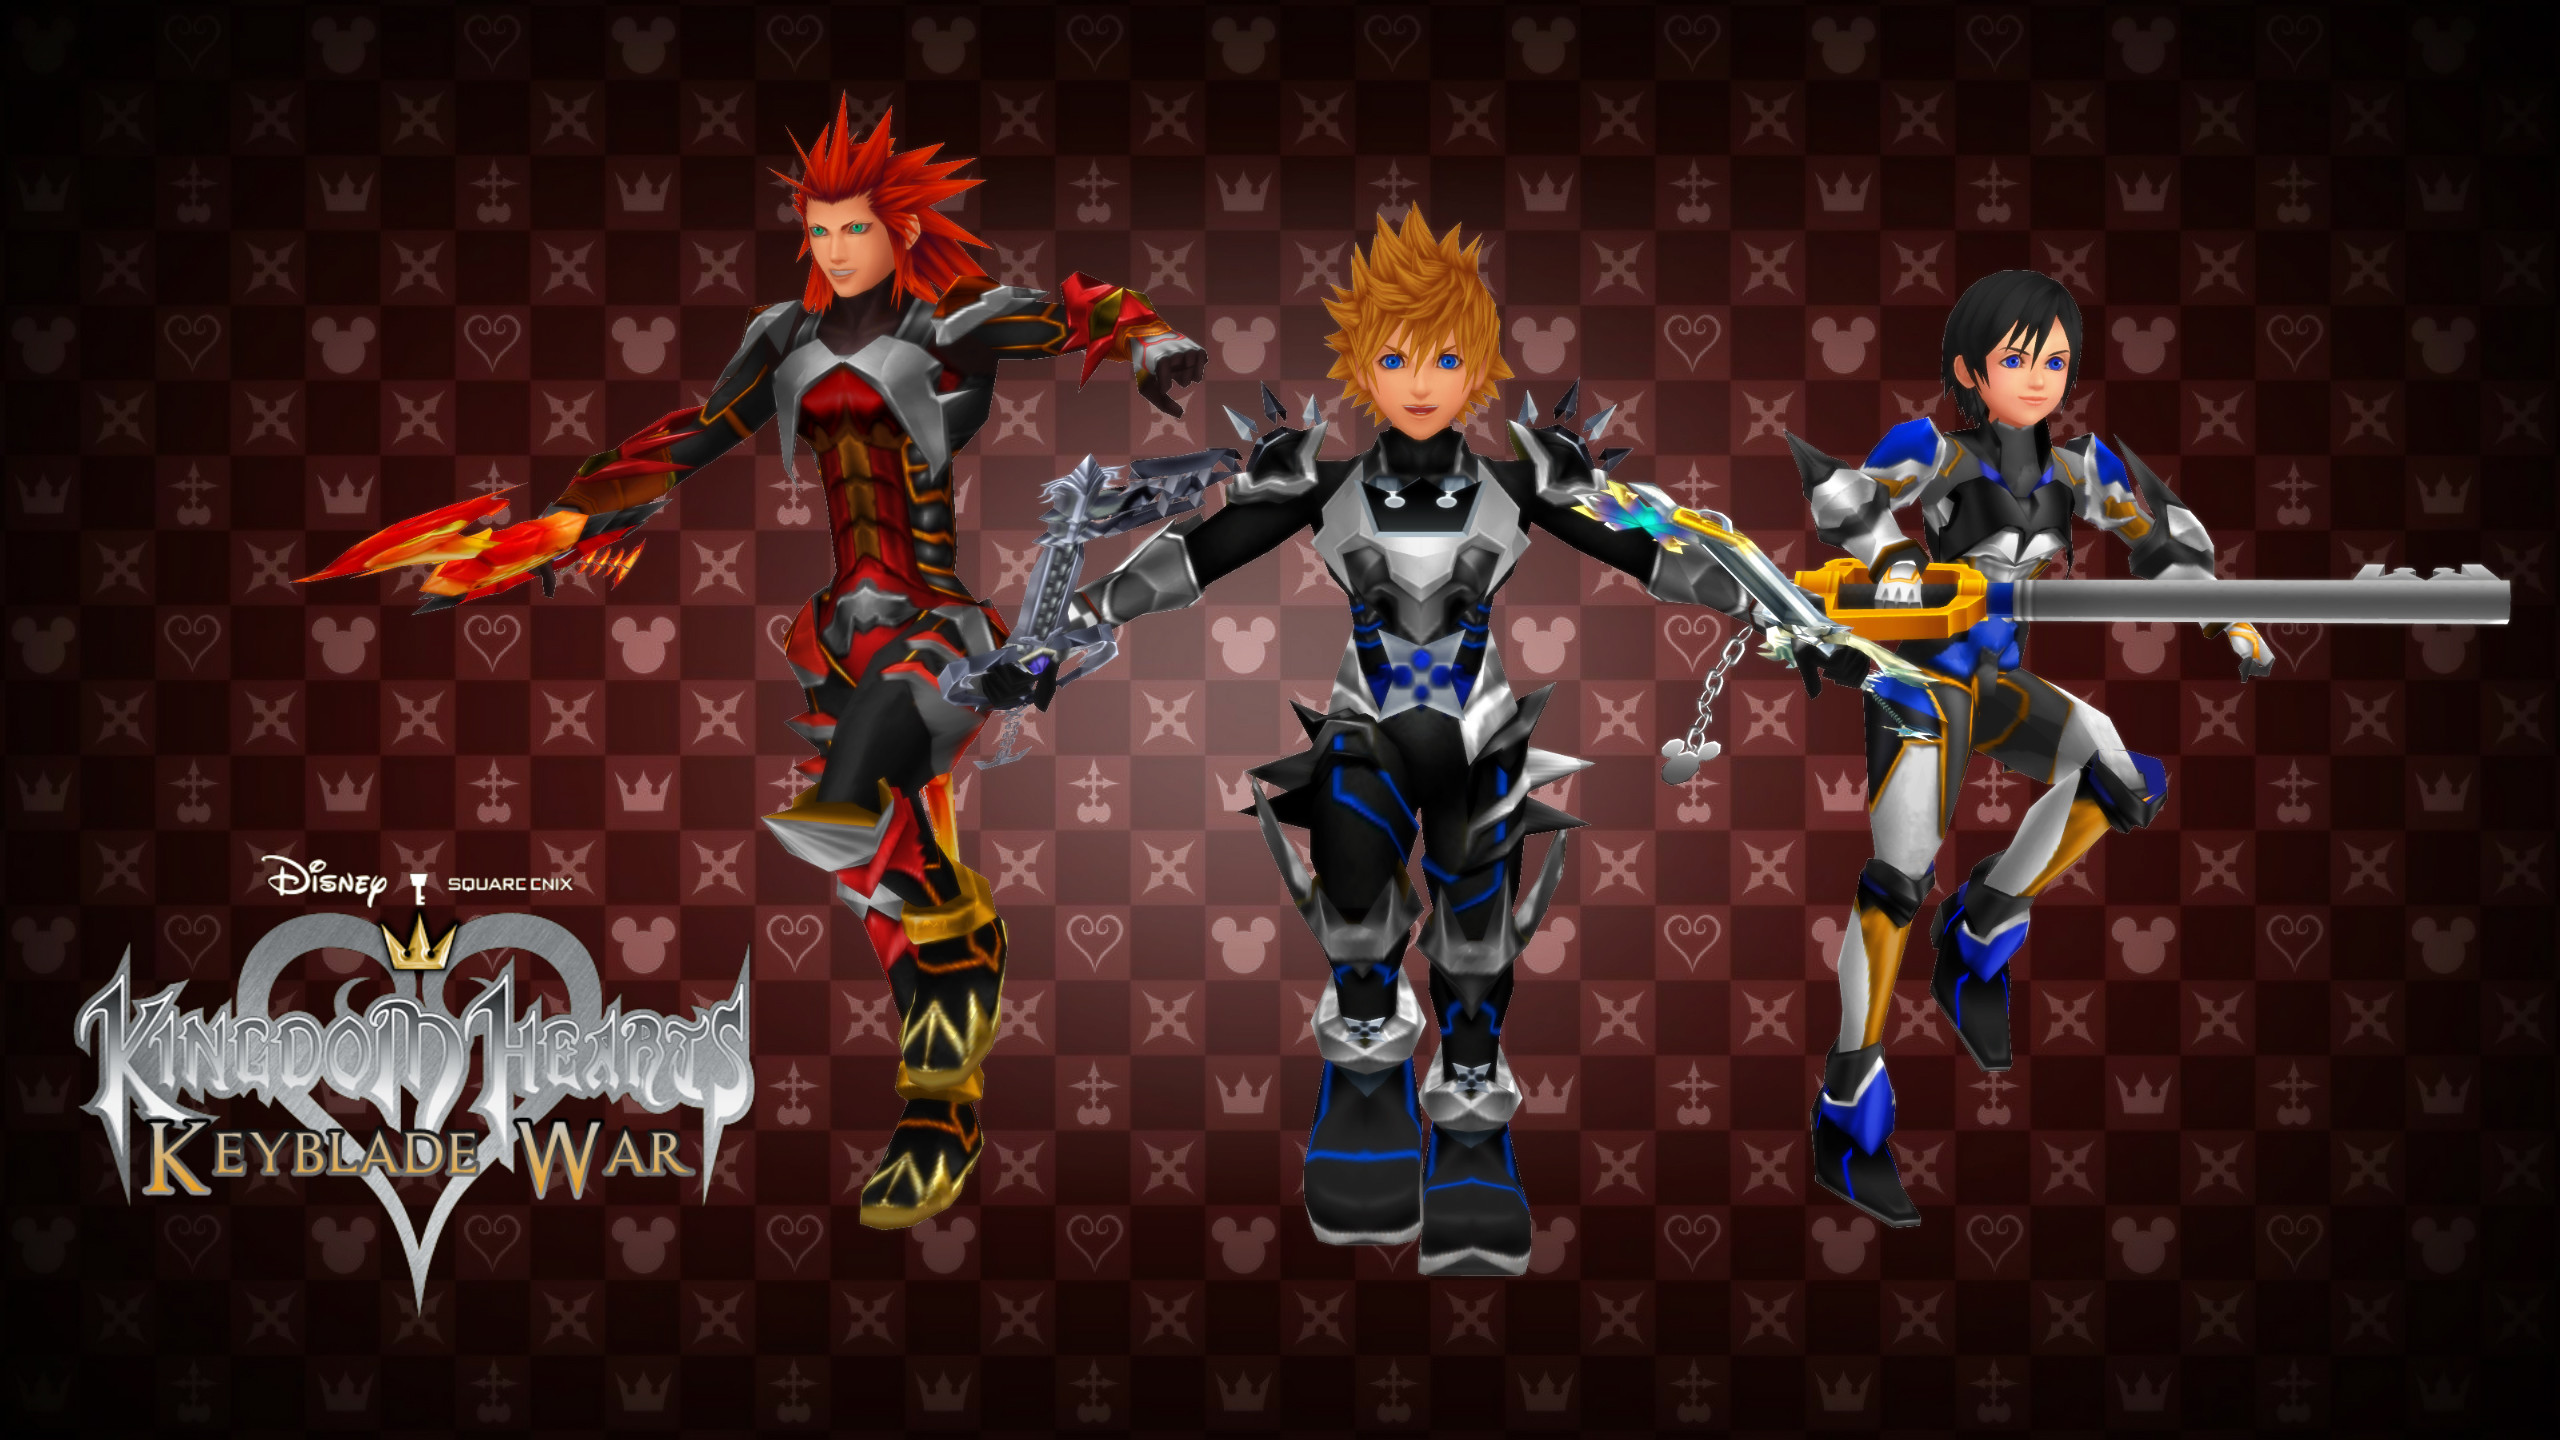 Axel Kingdom Hearts Wallpaper.